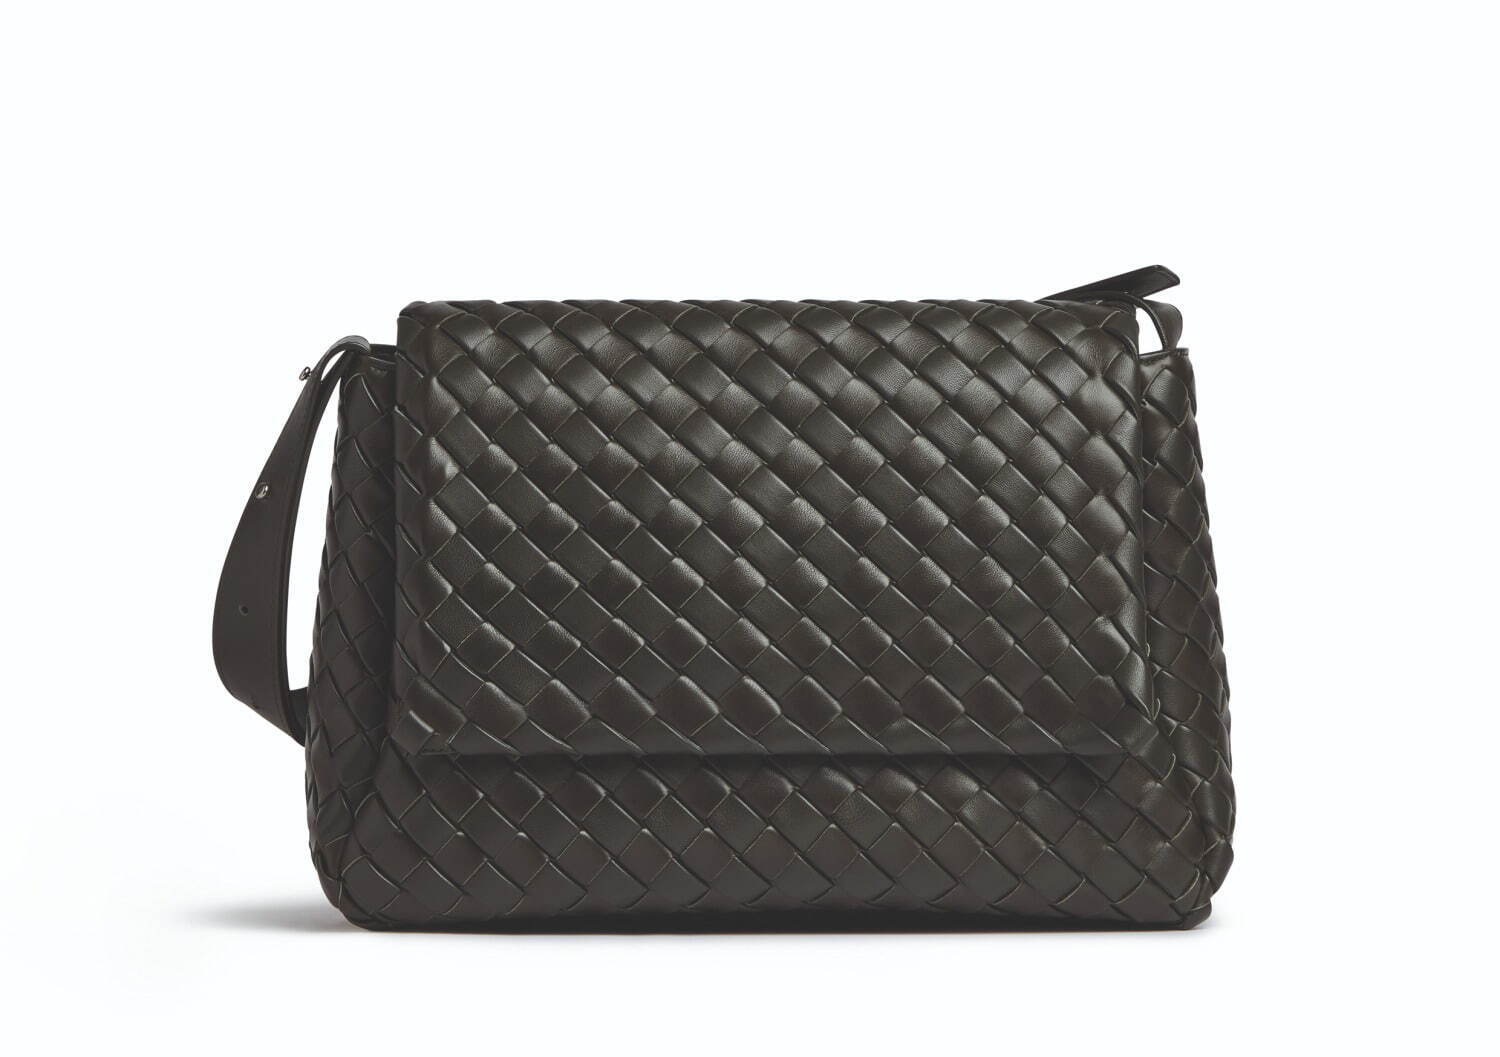 BOTTEGA VENETA ボッテガヴェネタ イントレチャート 192661 ショルダーバッグ ブラック 黒 BLACK メンズ レディース ユニセックス BAG Shoulder bag leather